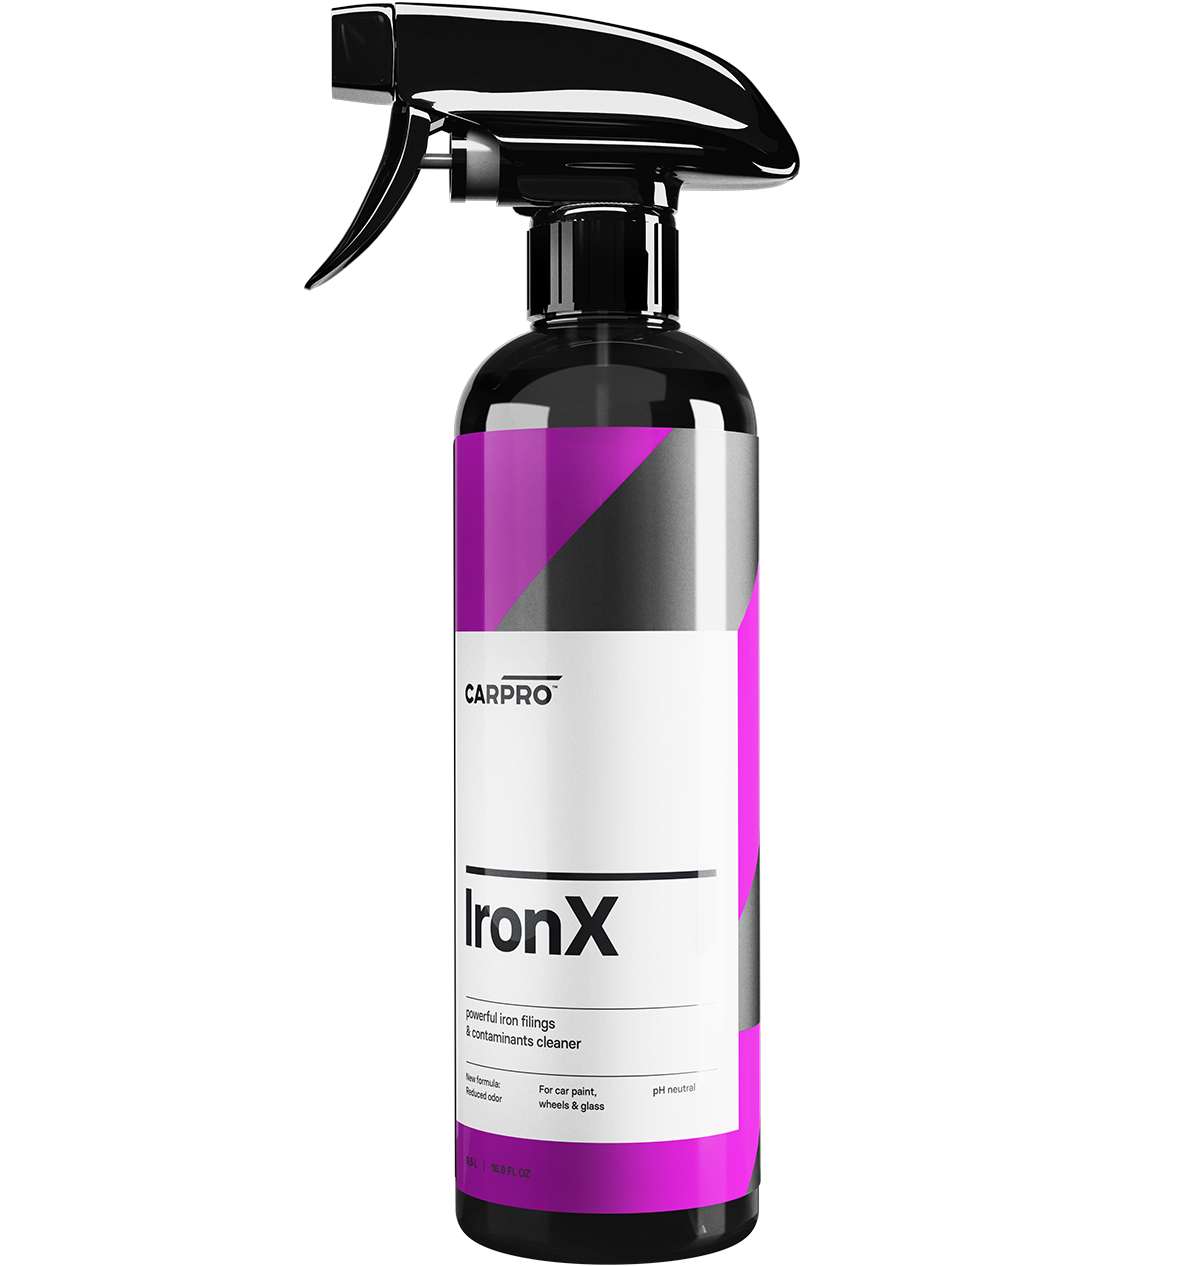 Carpro IronX Decontamination Paste